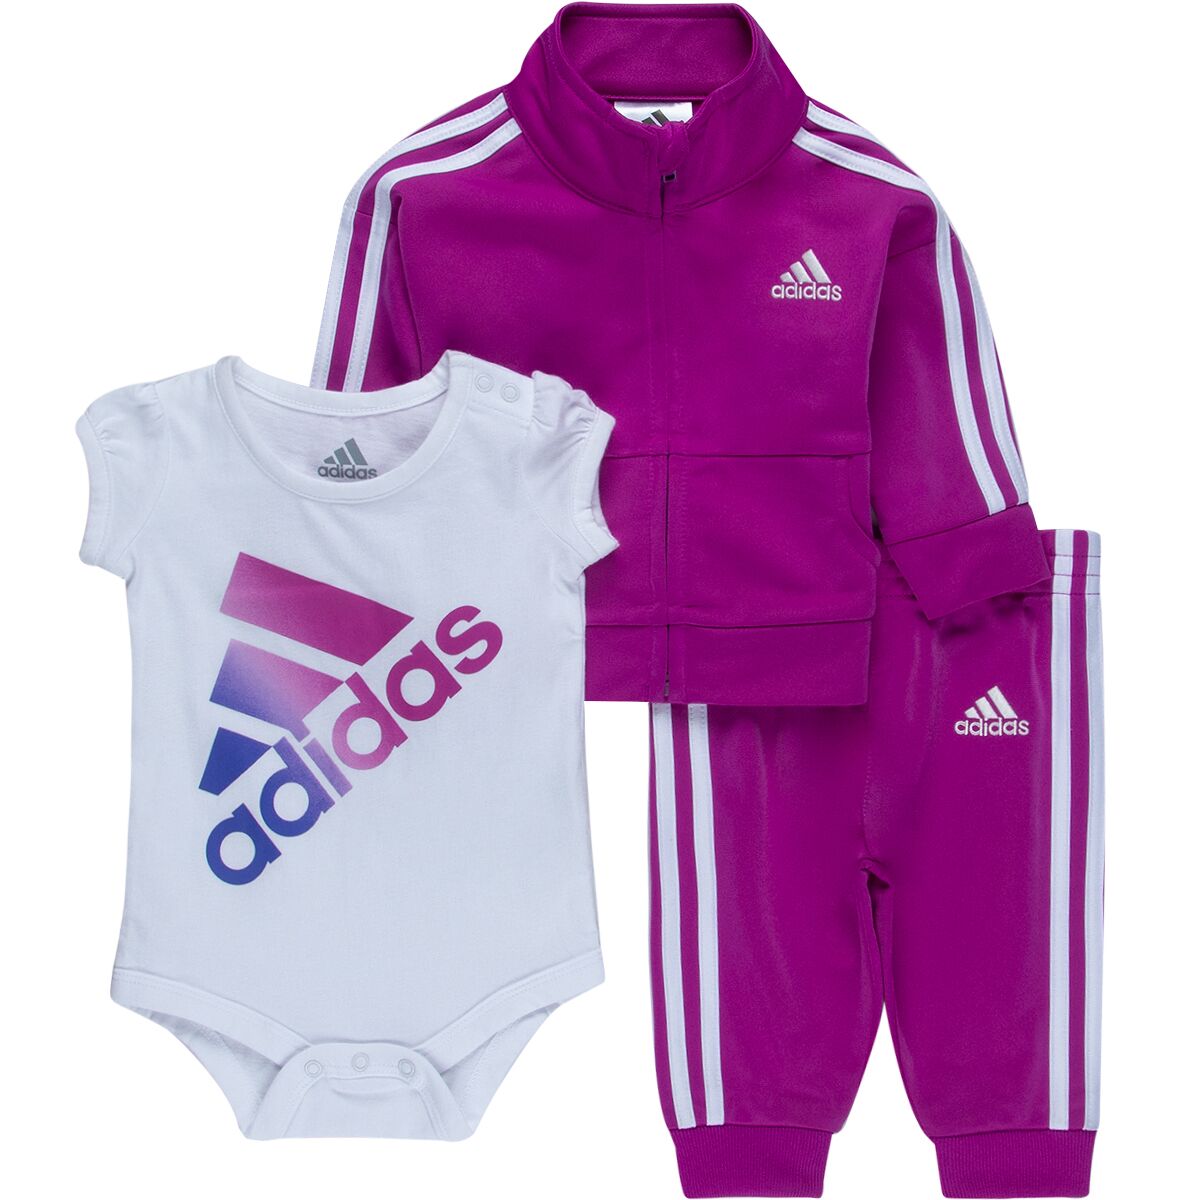 Adidas Tricot 3-Piece Track Set - Infant Girls'